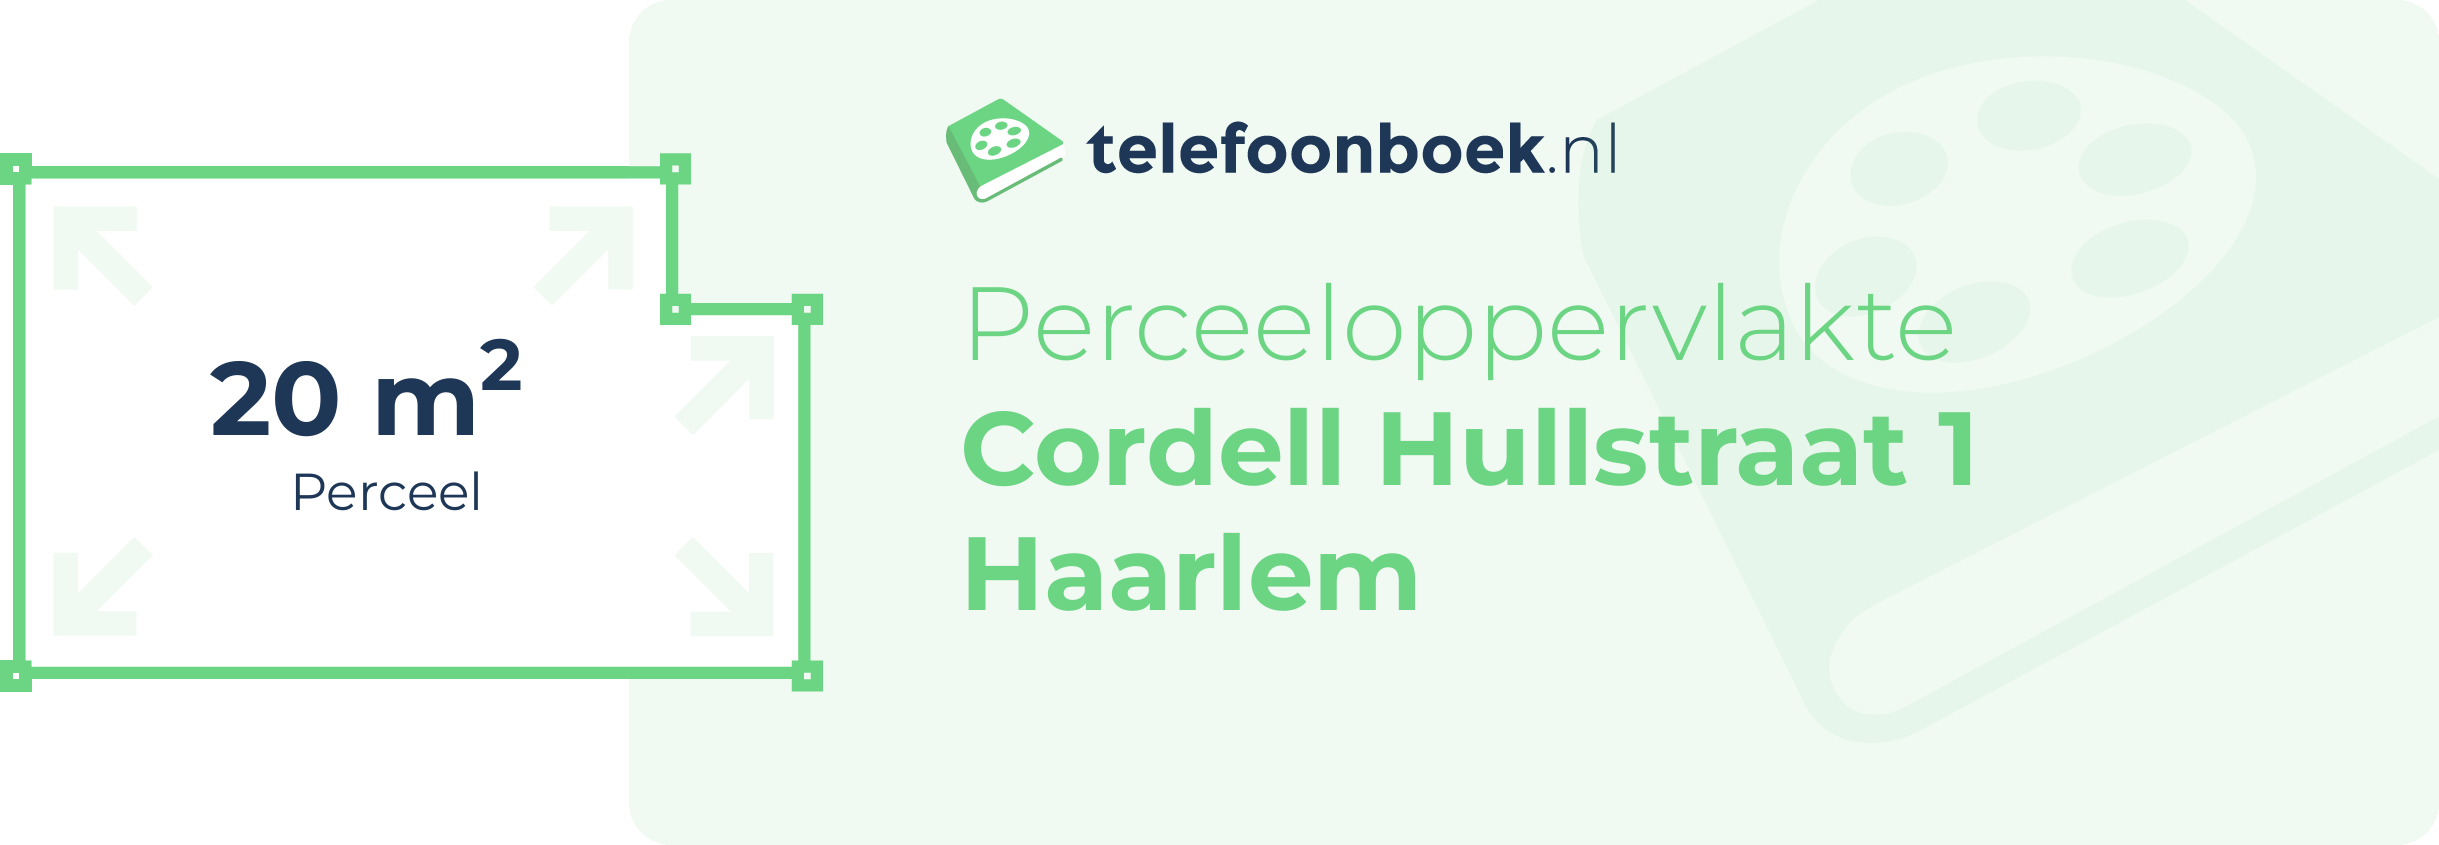 Perceeloppervlakte Cordell Hullstraat 1 Haarlem